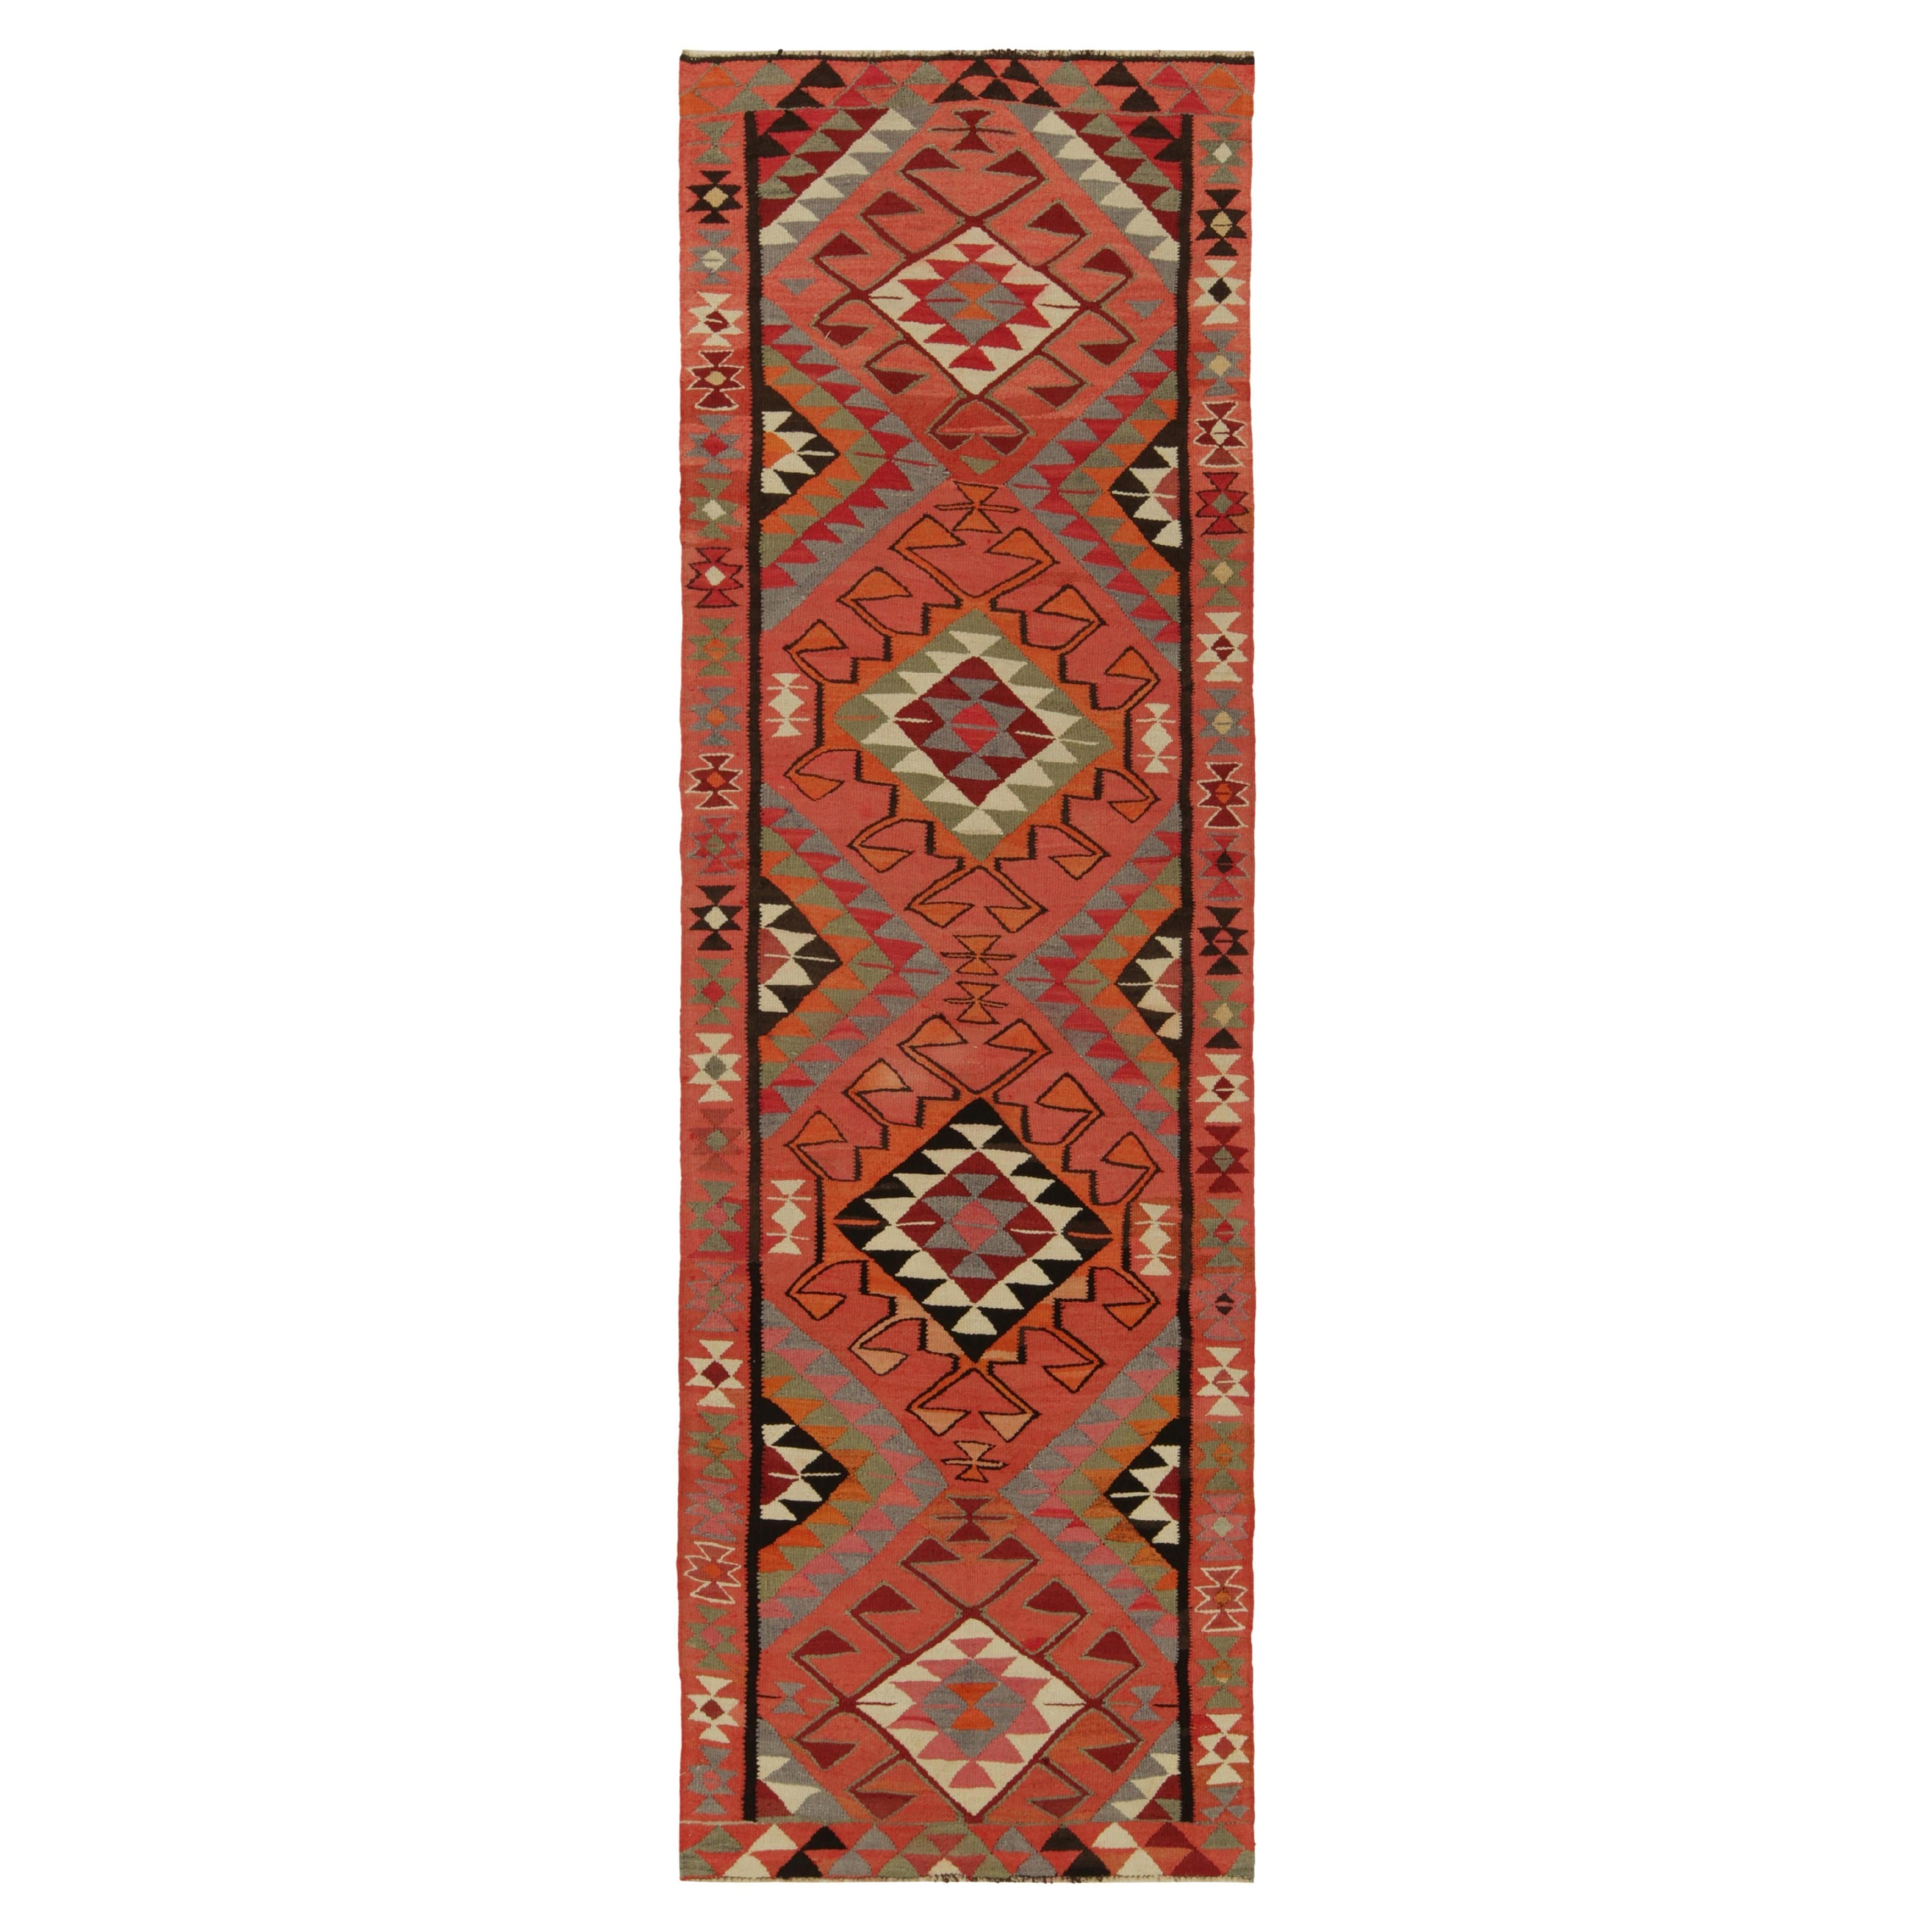 Vintage Kilim Tribal Runner in Multicolor Geometric Patterns by Rug & Kilim For Sale